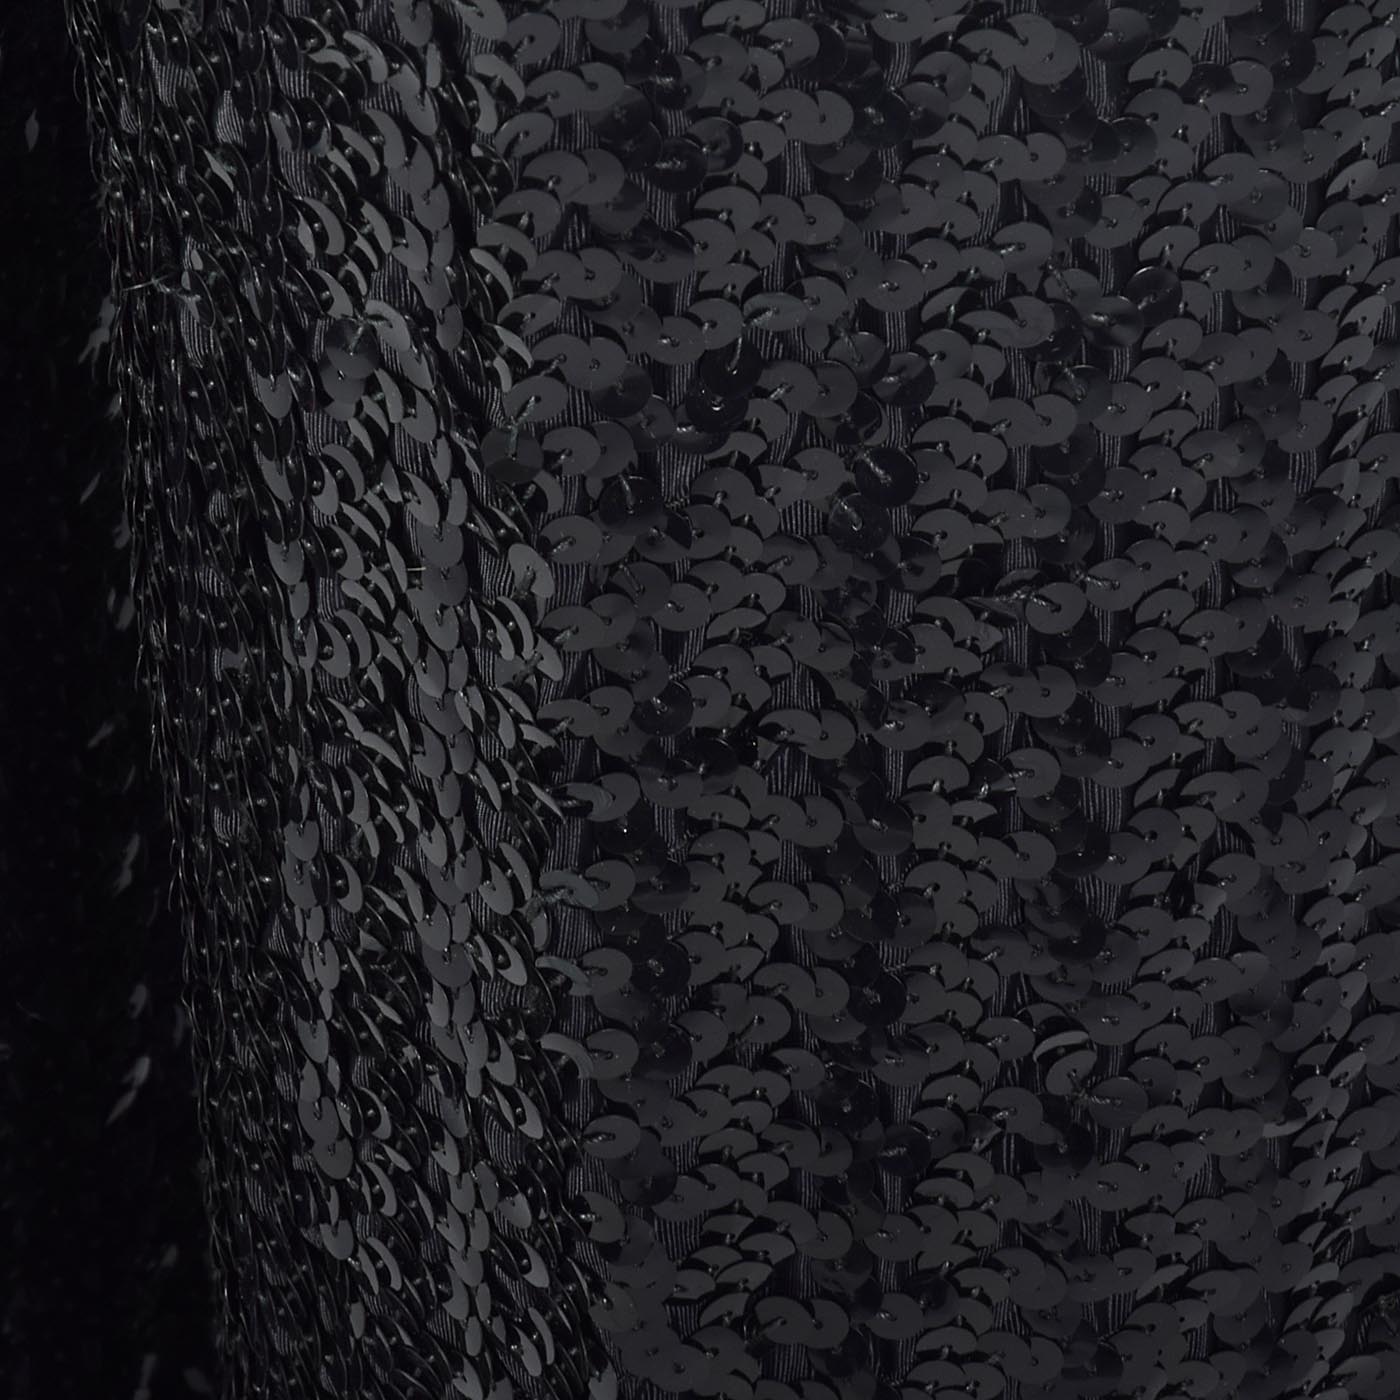 1970s Saks Fifth Avenue Black Sequin Evening Pants